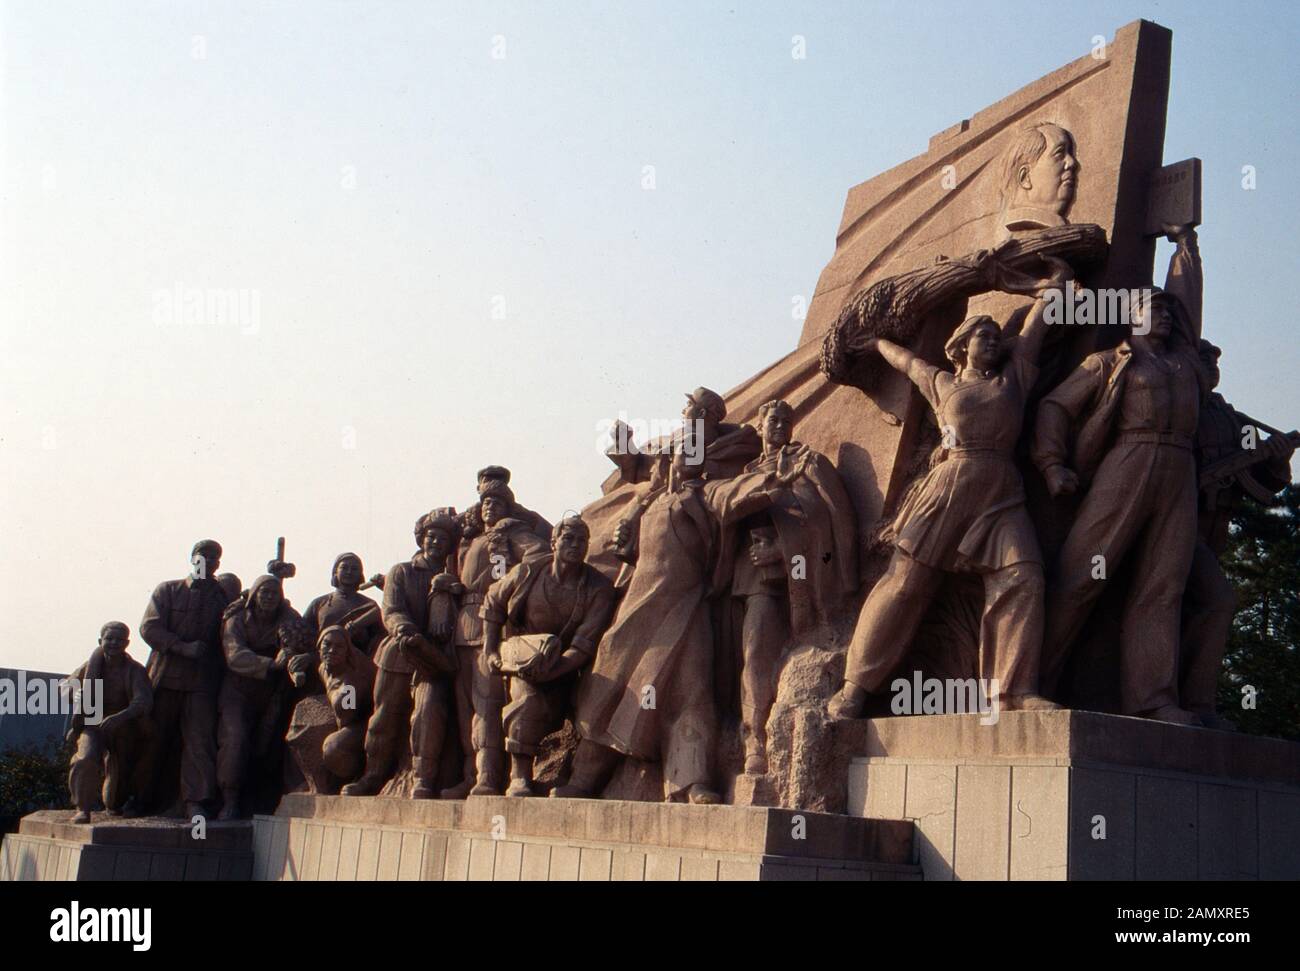 Arbeitnehmer Denkmal vor der Mao Zedong Memorial Hall auf dem Platz des Himmlischen Friedens à Pékin, Chine um 1990. Monument des travailleurs sur la place Tiananmen à Beijing, Chine vers 1990. Banque D'Images